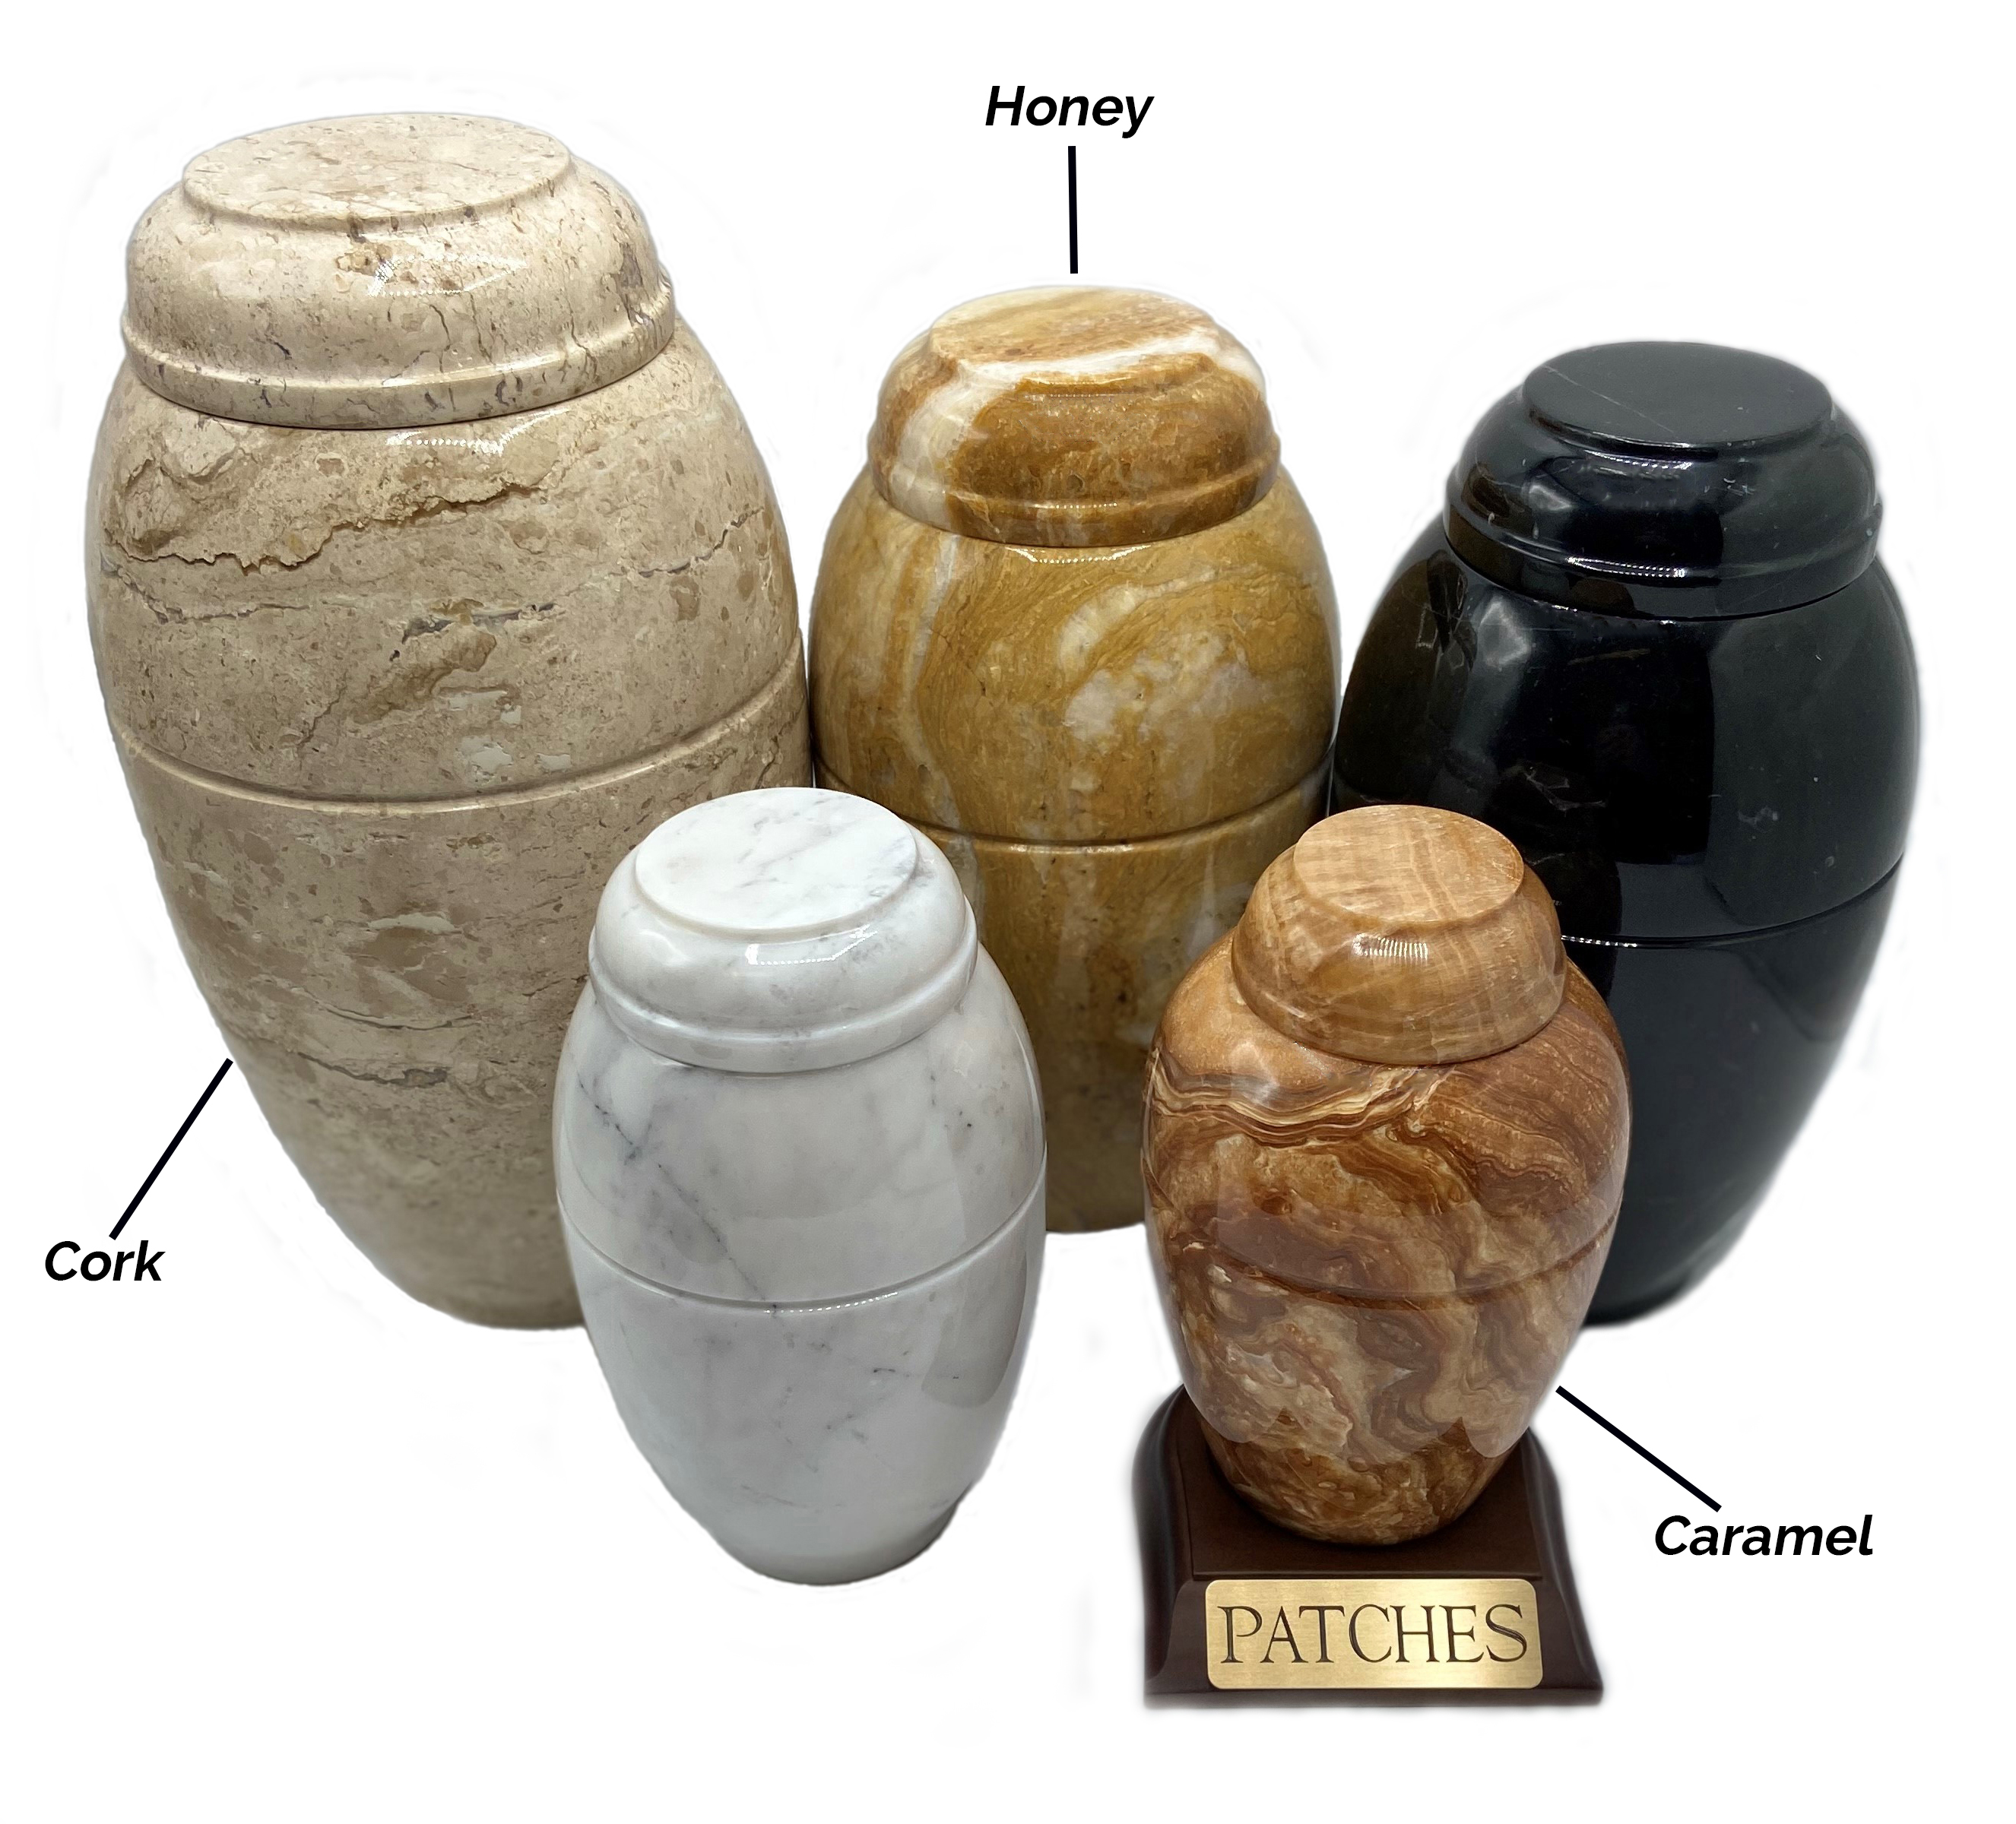 Marble Vase Series - Large (no base)